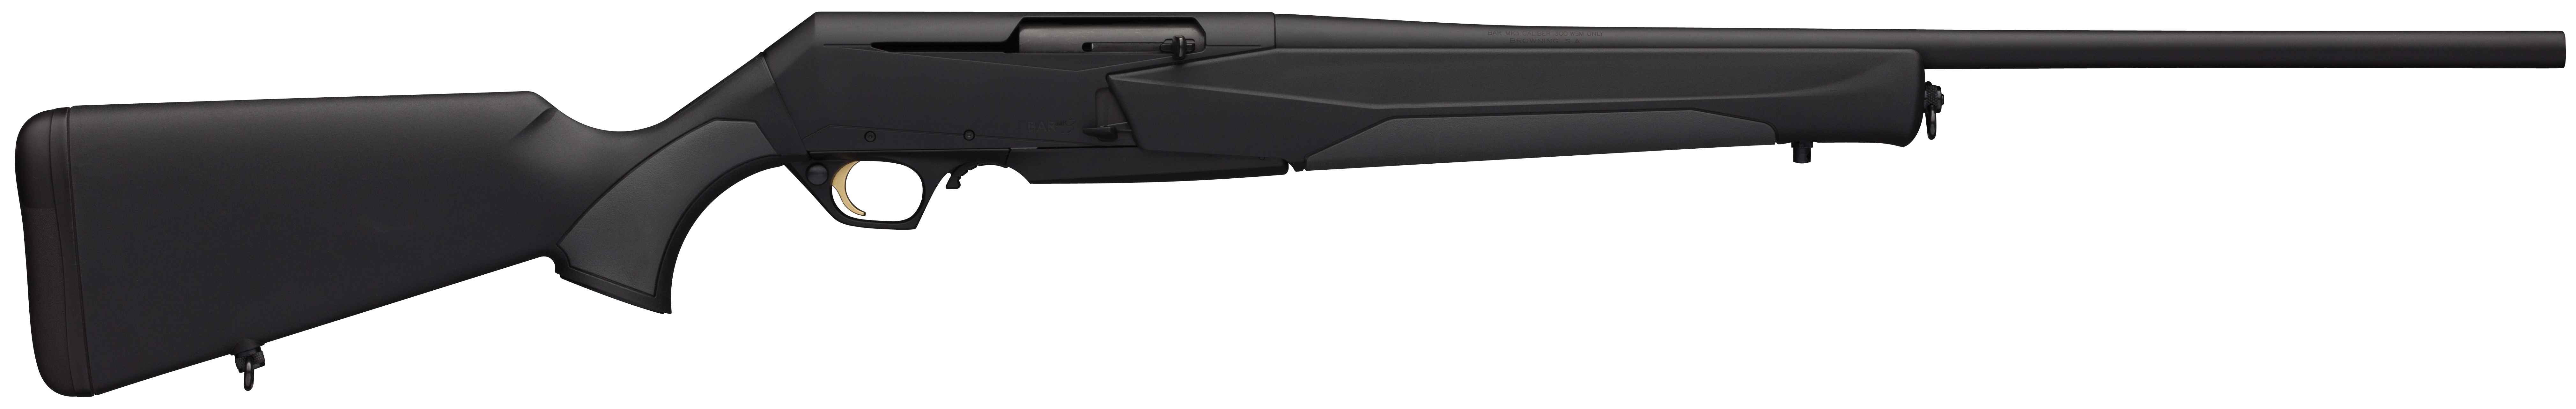 Browning BAR MK III Stalker